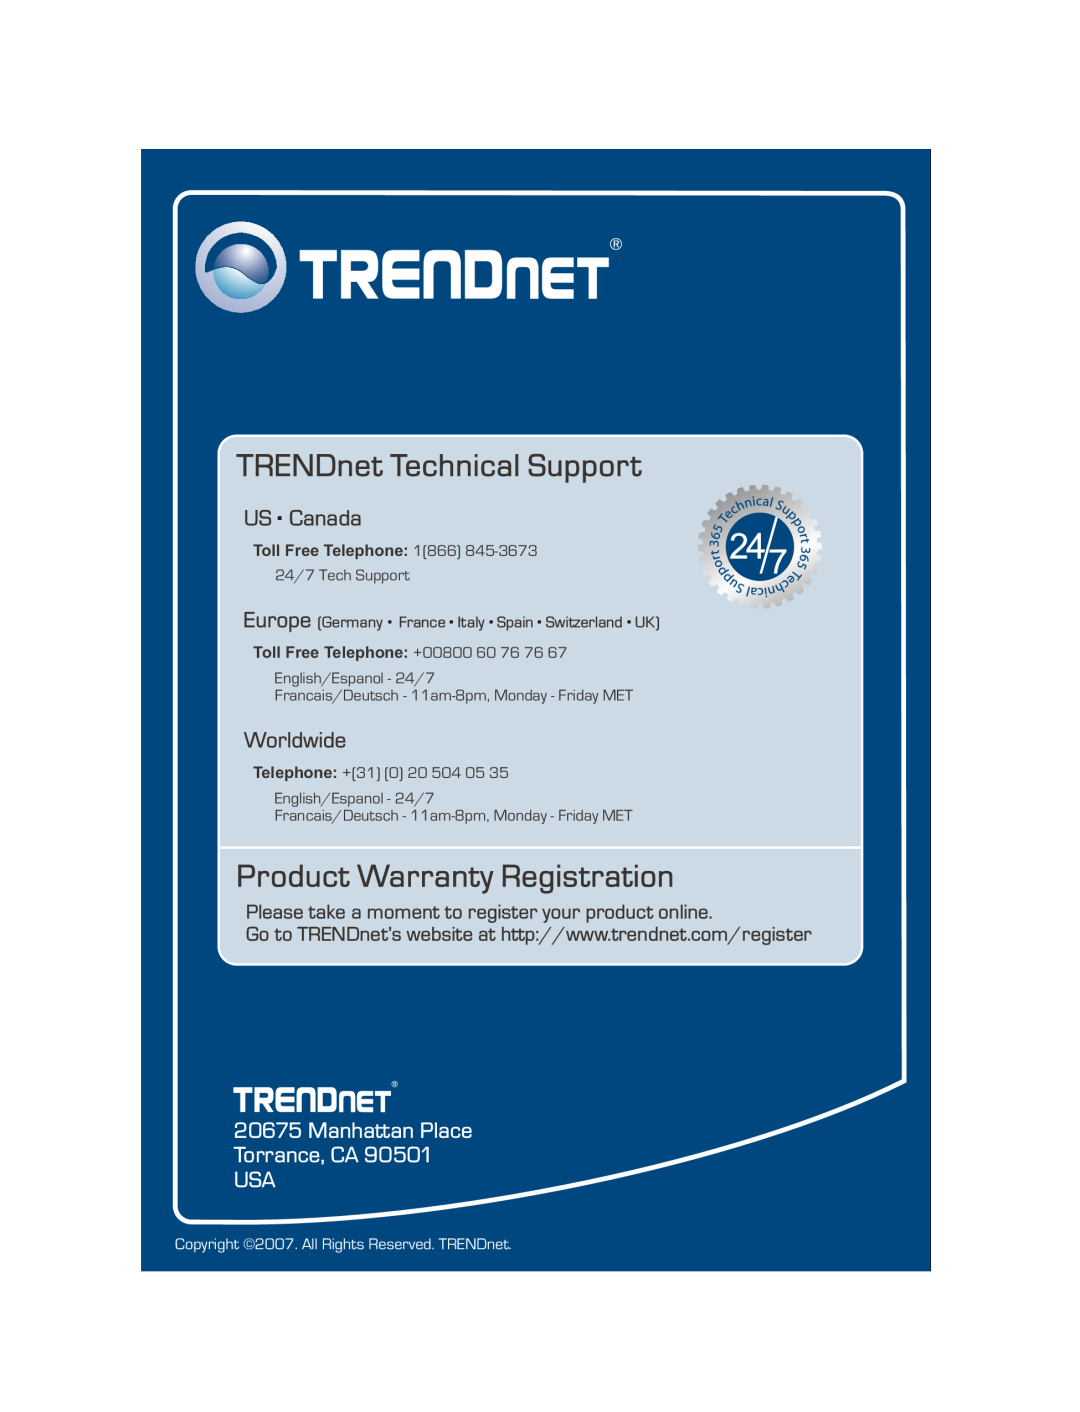 TRENDnet TK-210 Manhattan Place Torrance, CA USA, TRENDnet Technical Support, Product Warranty Registration, US . Canada 